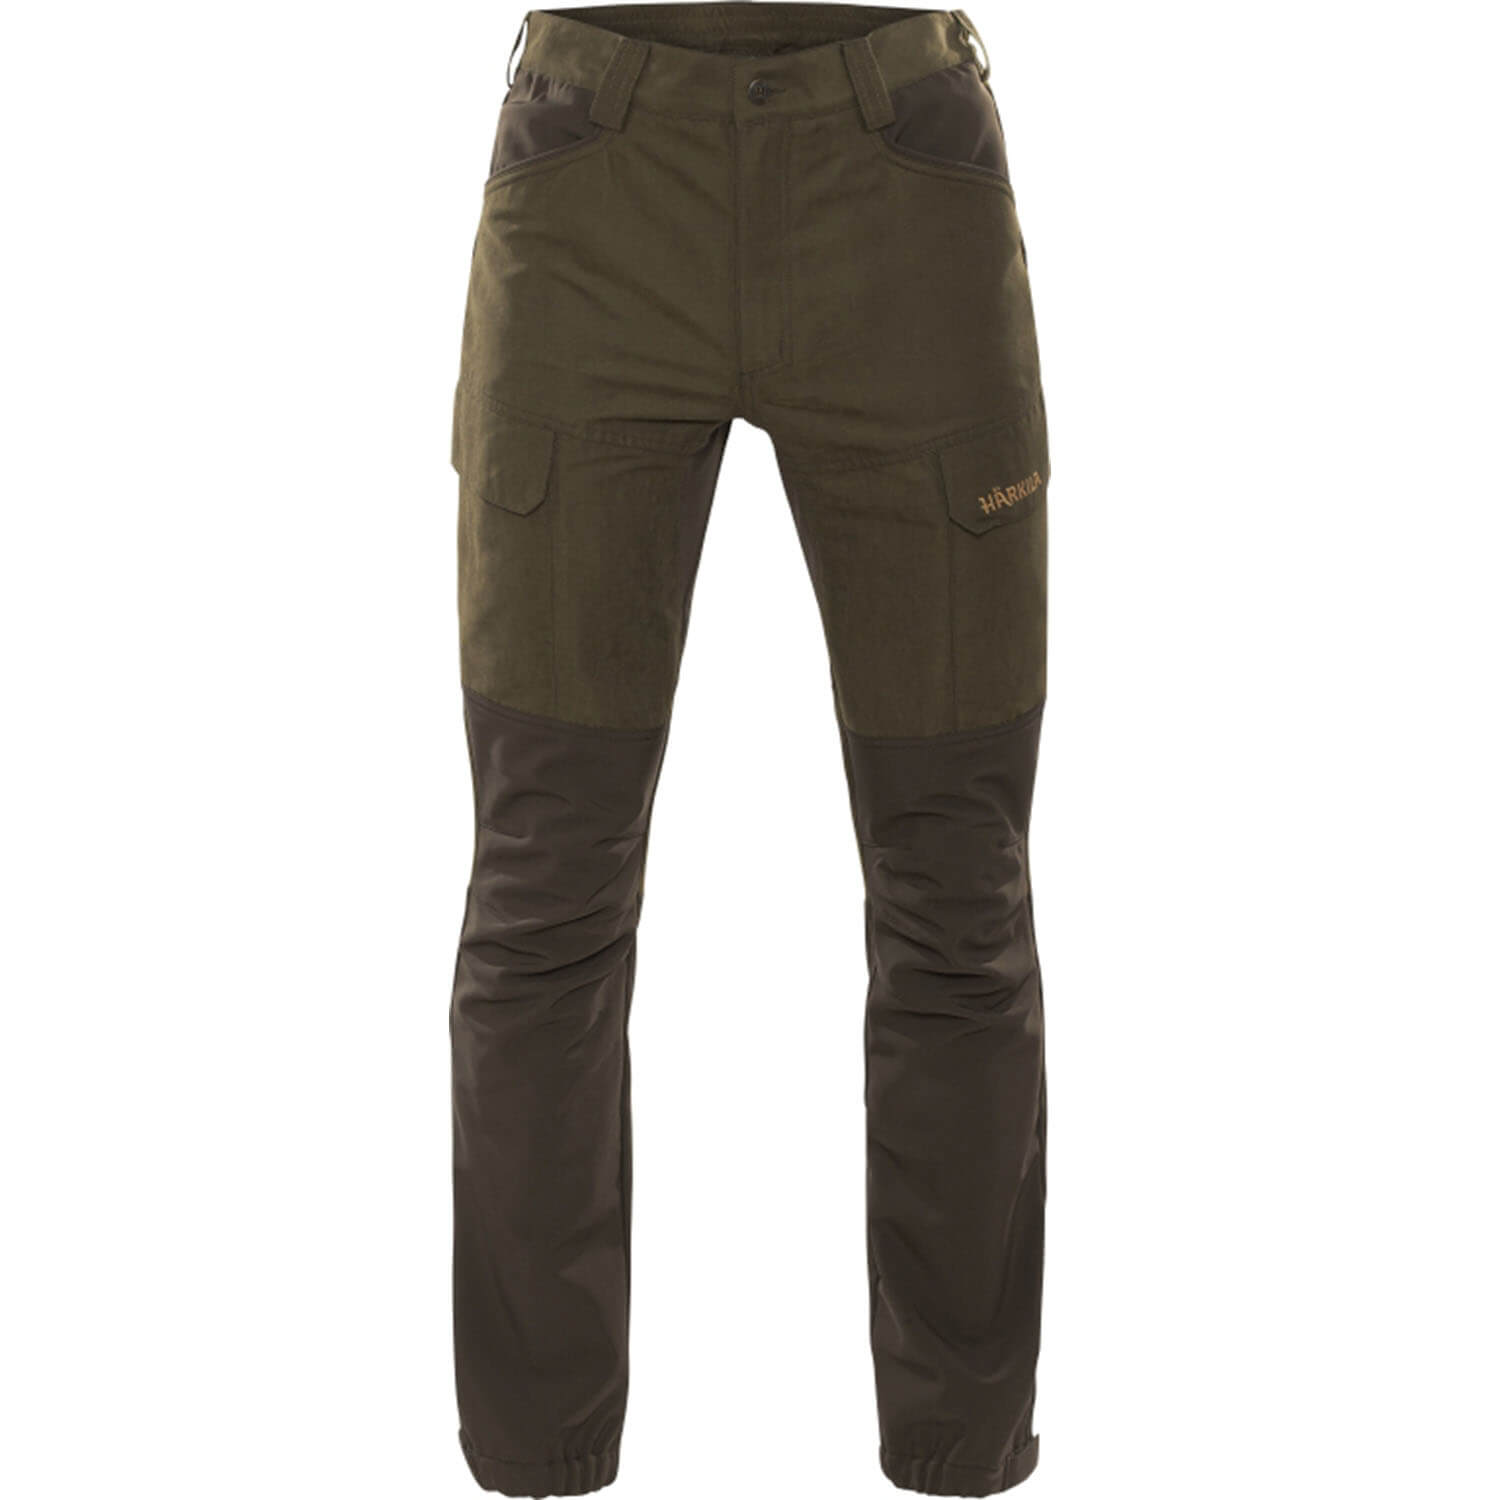 Härkila Trousers Scandinavian (Willow green/Deep brown) - Hunting Trousers